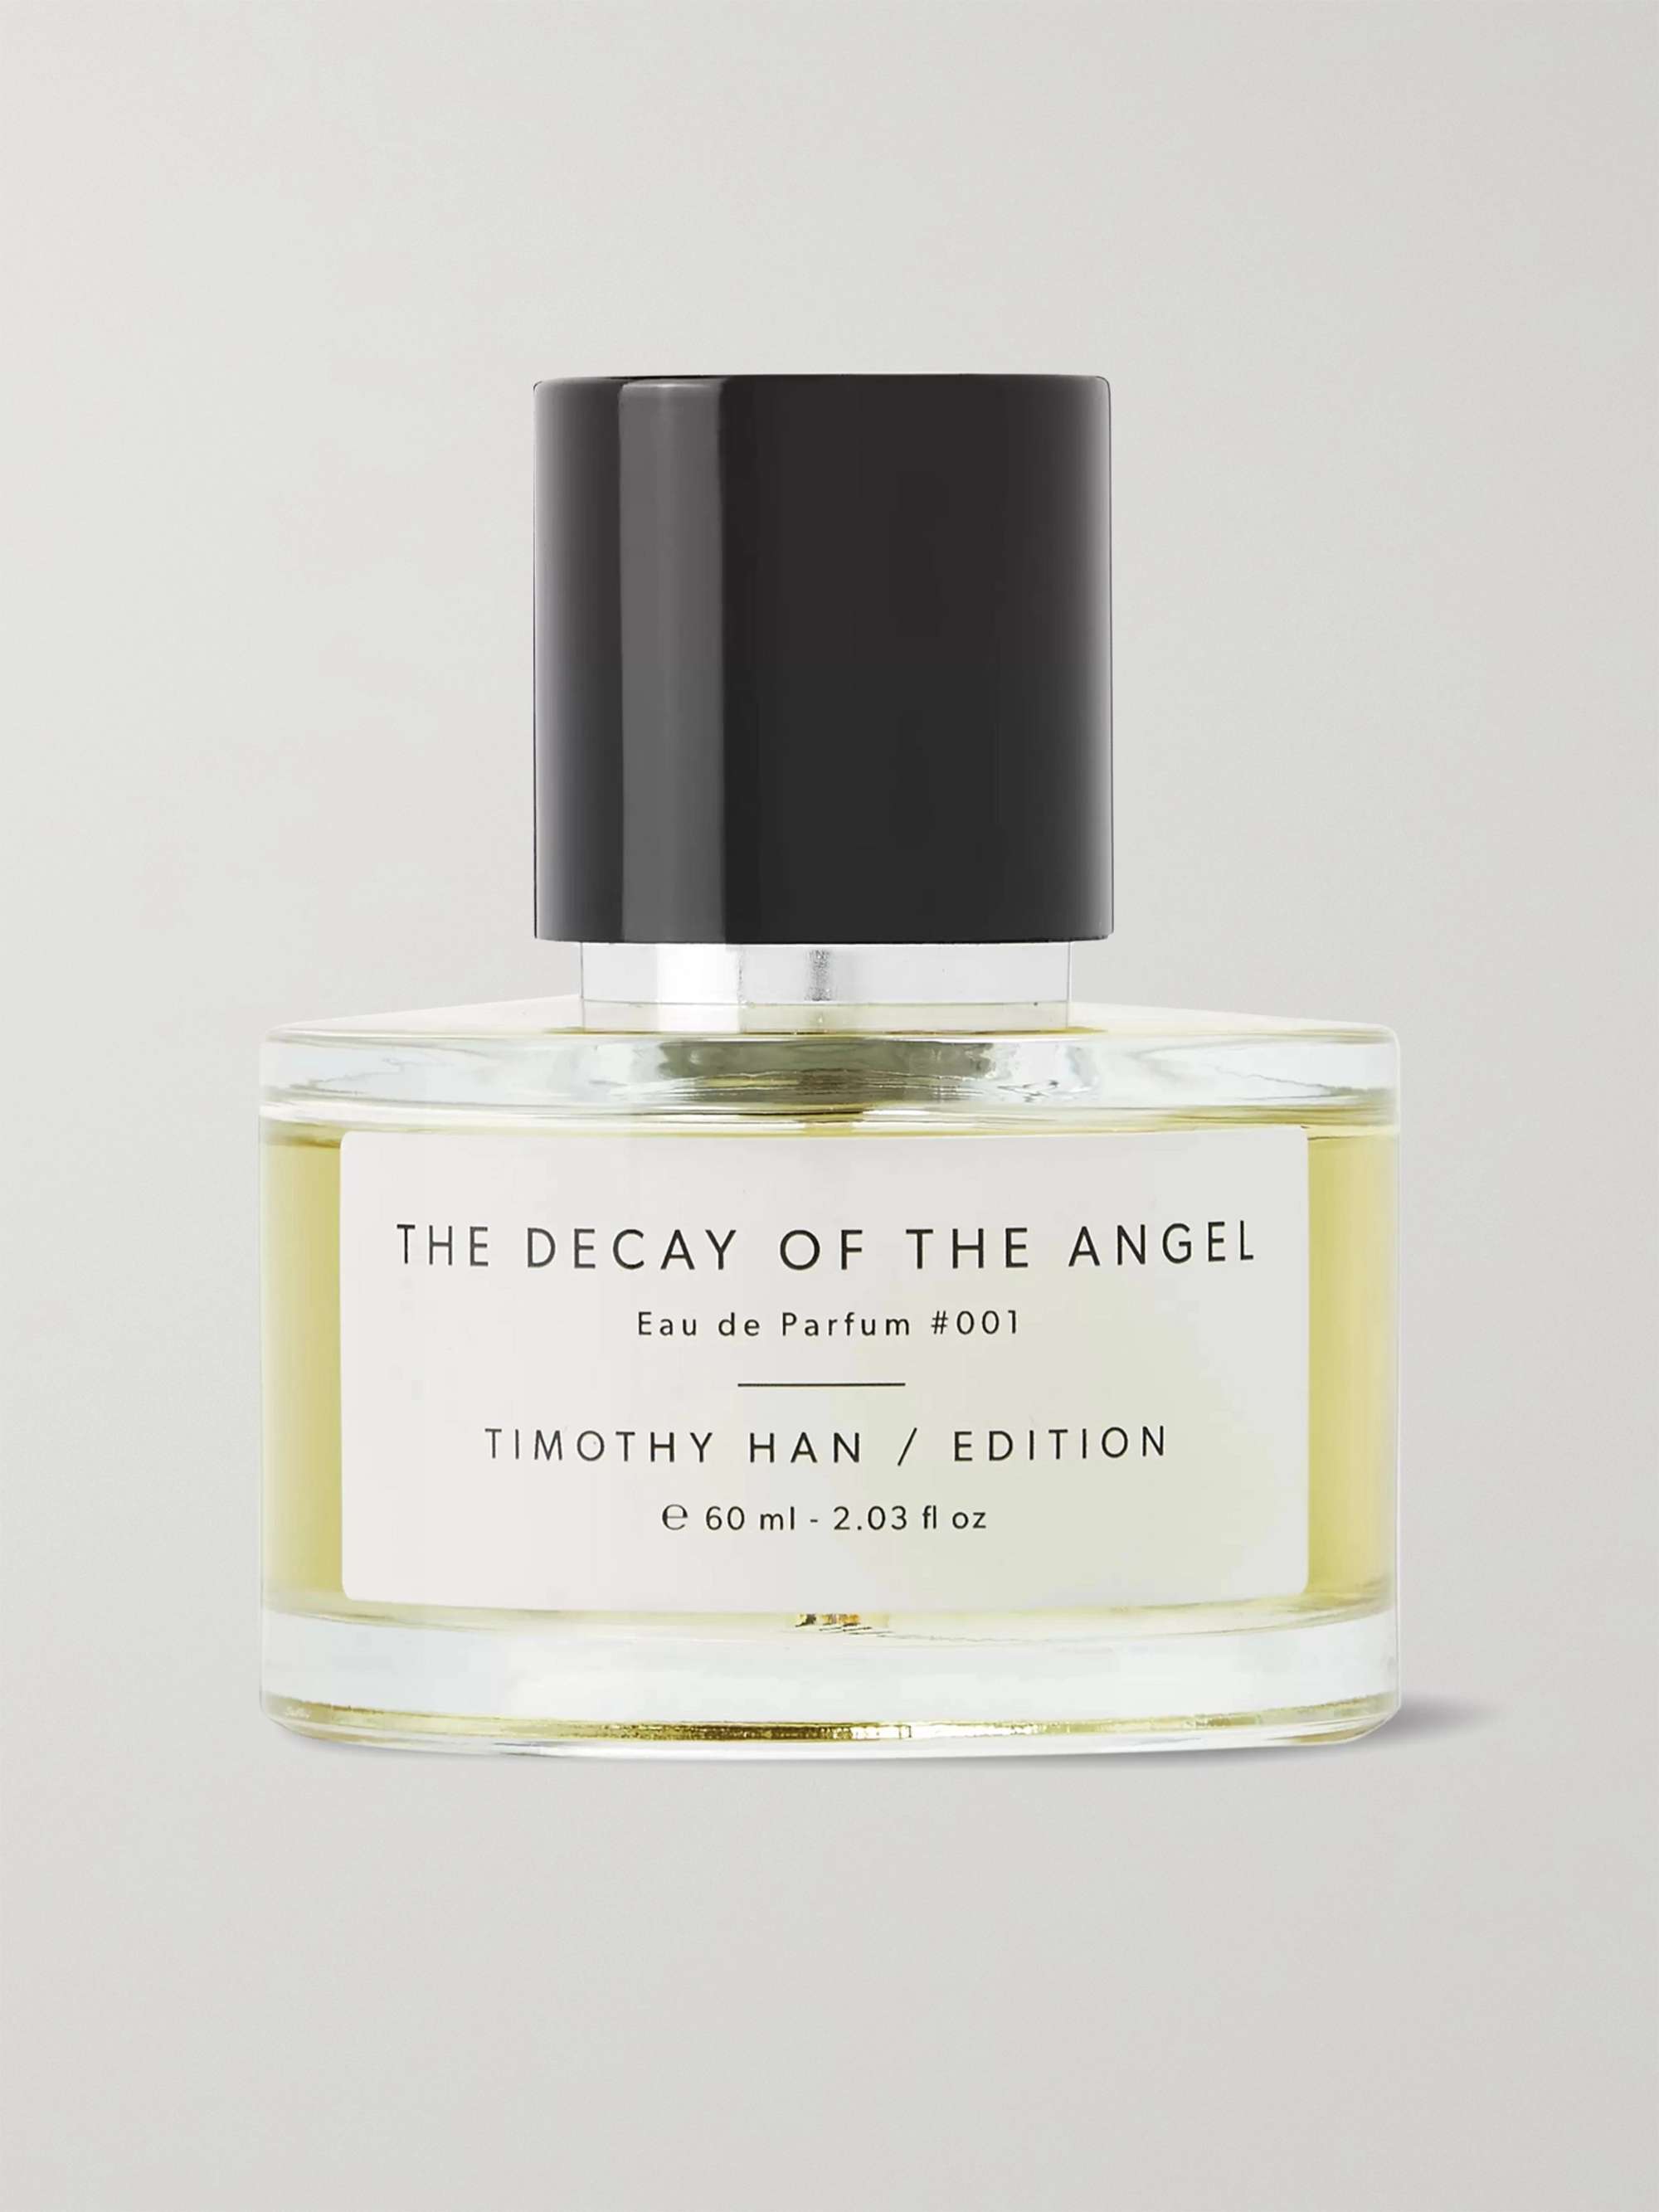 TIMOTHY HAN / EDITION The Decay of the Angel Eau de Parfum, 60ml